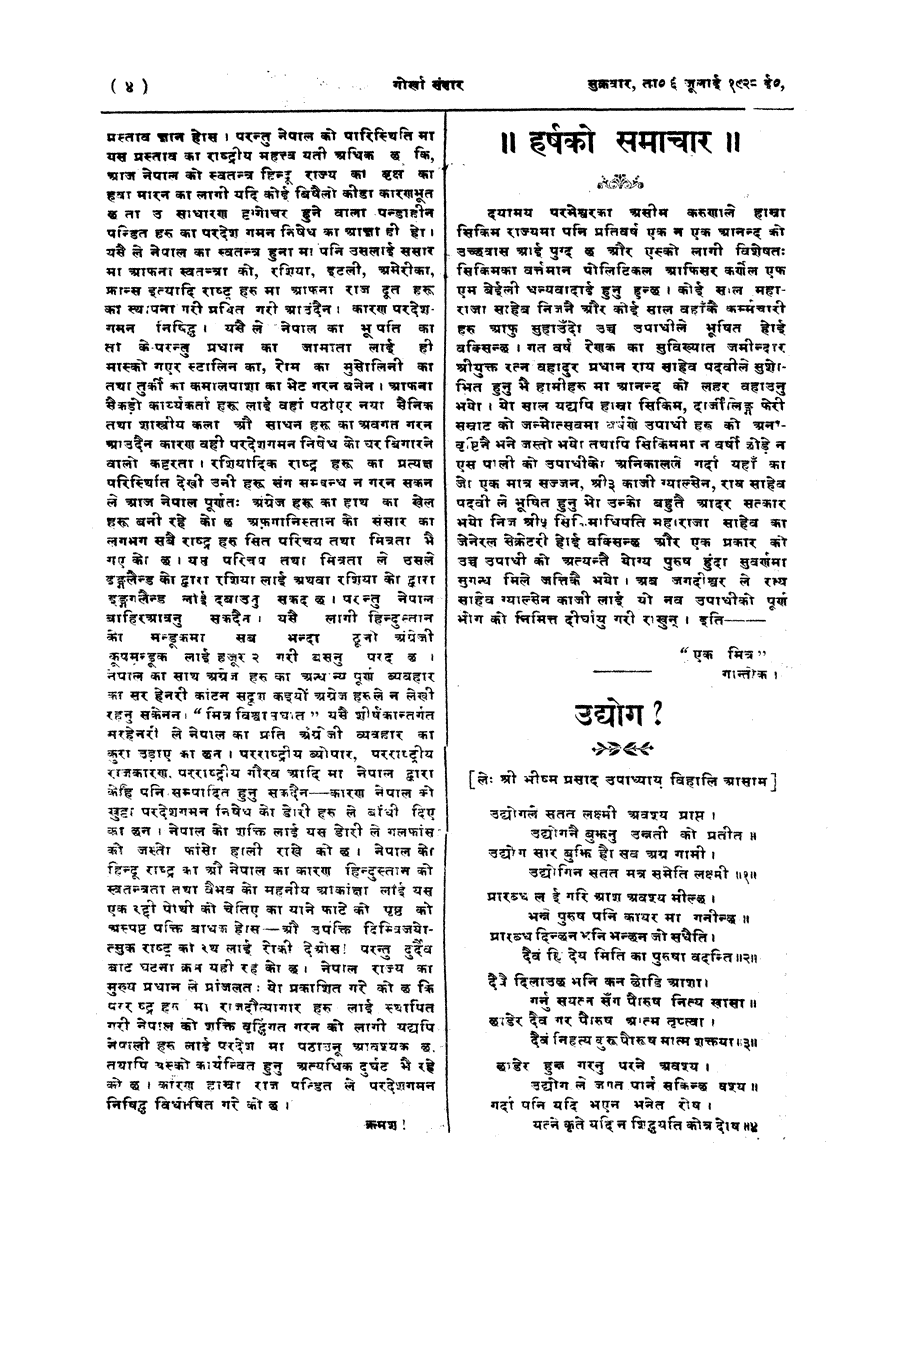 Gorkha Sansar, 6 July 1928, page 4